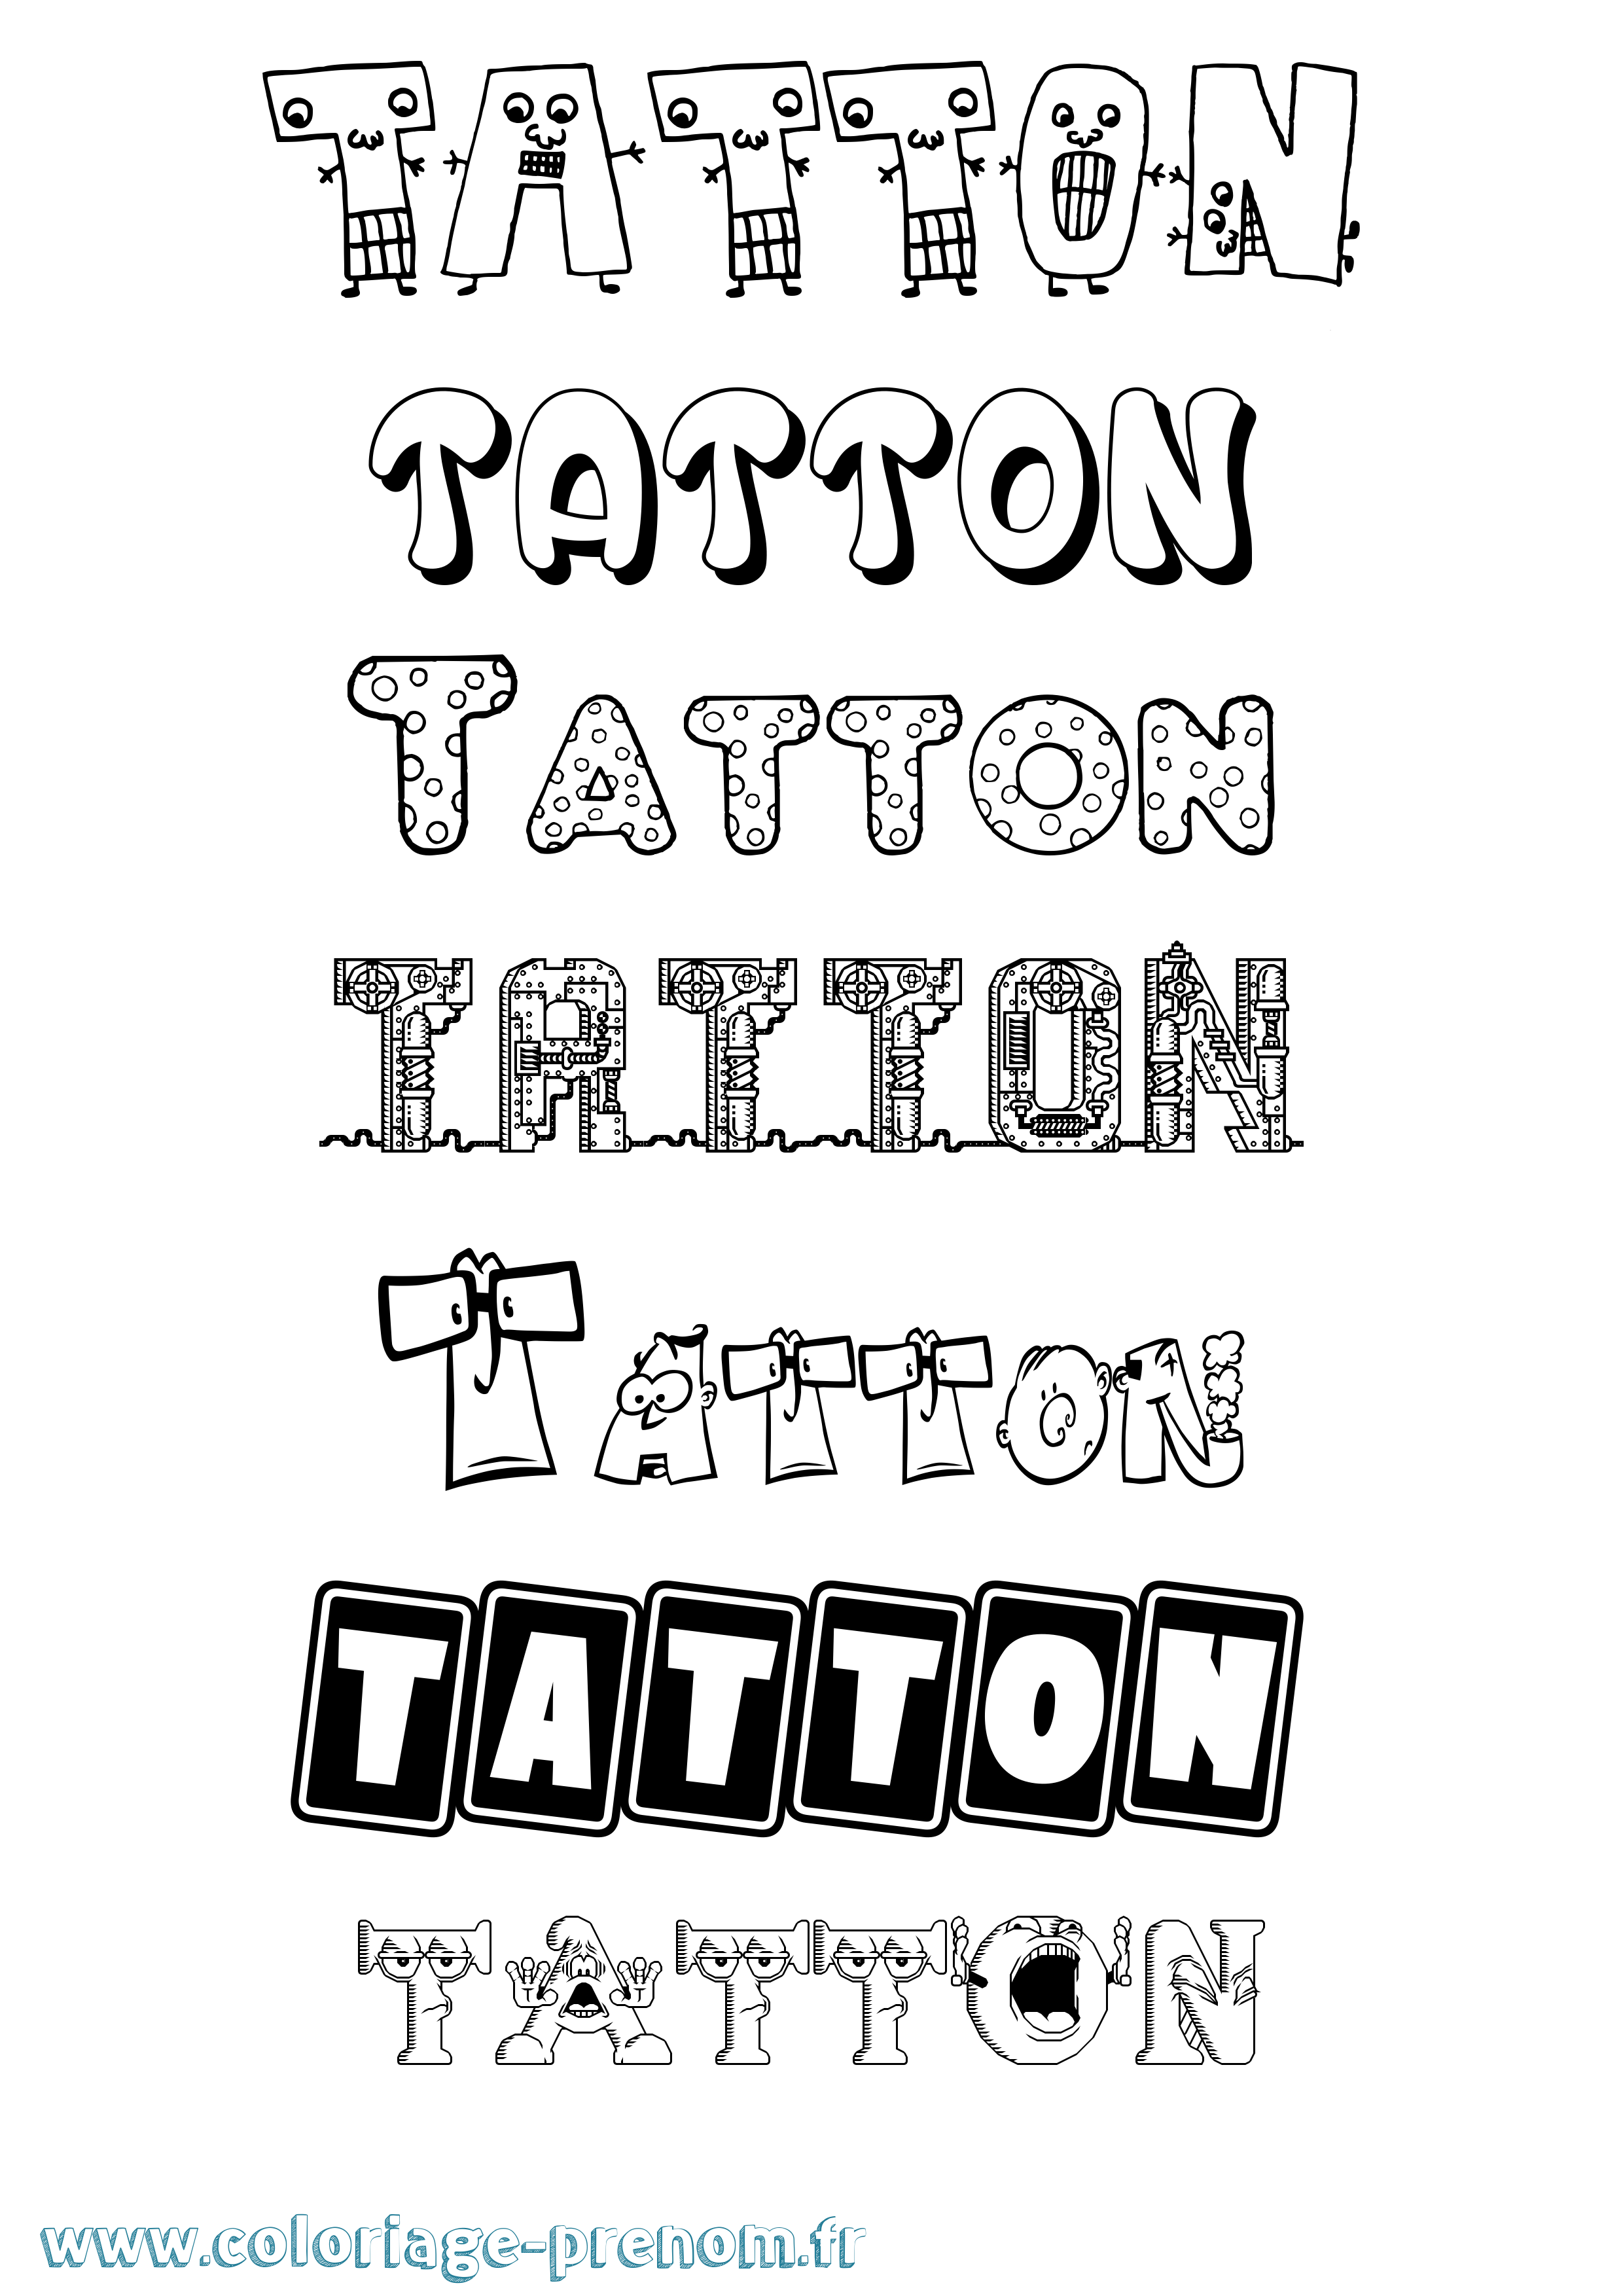 Coloriage prénom Tatton Fun